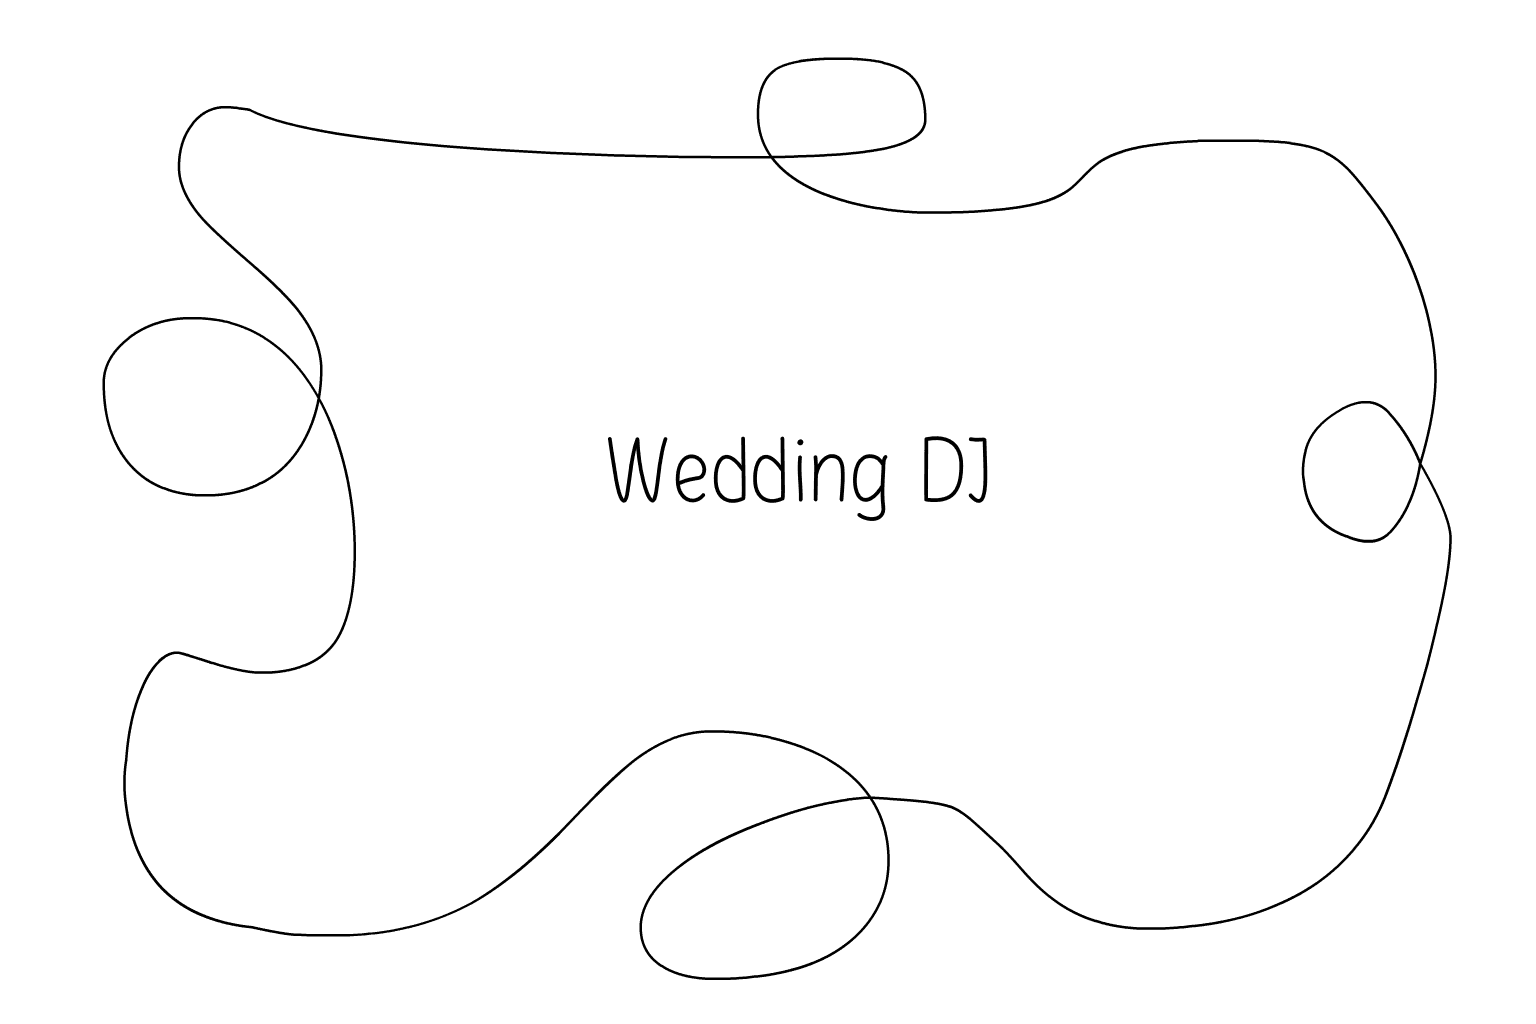 Illustration of wedding DJ and music